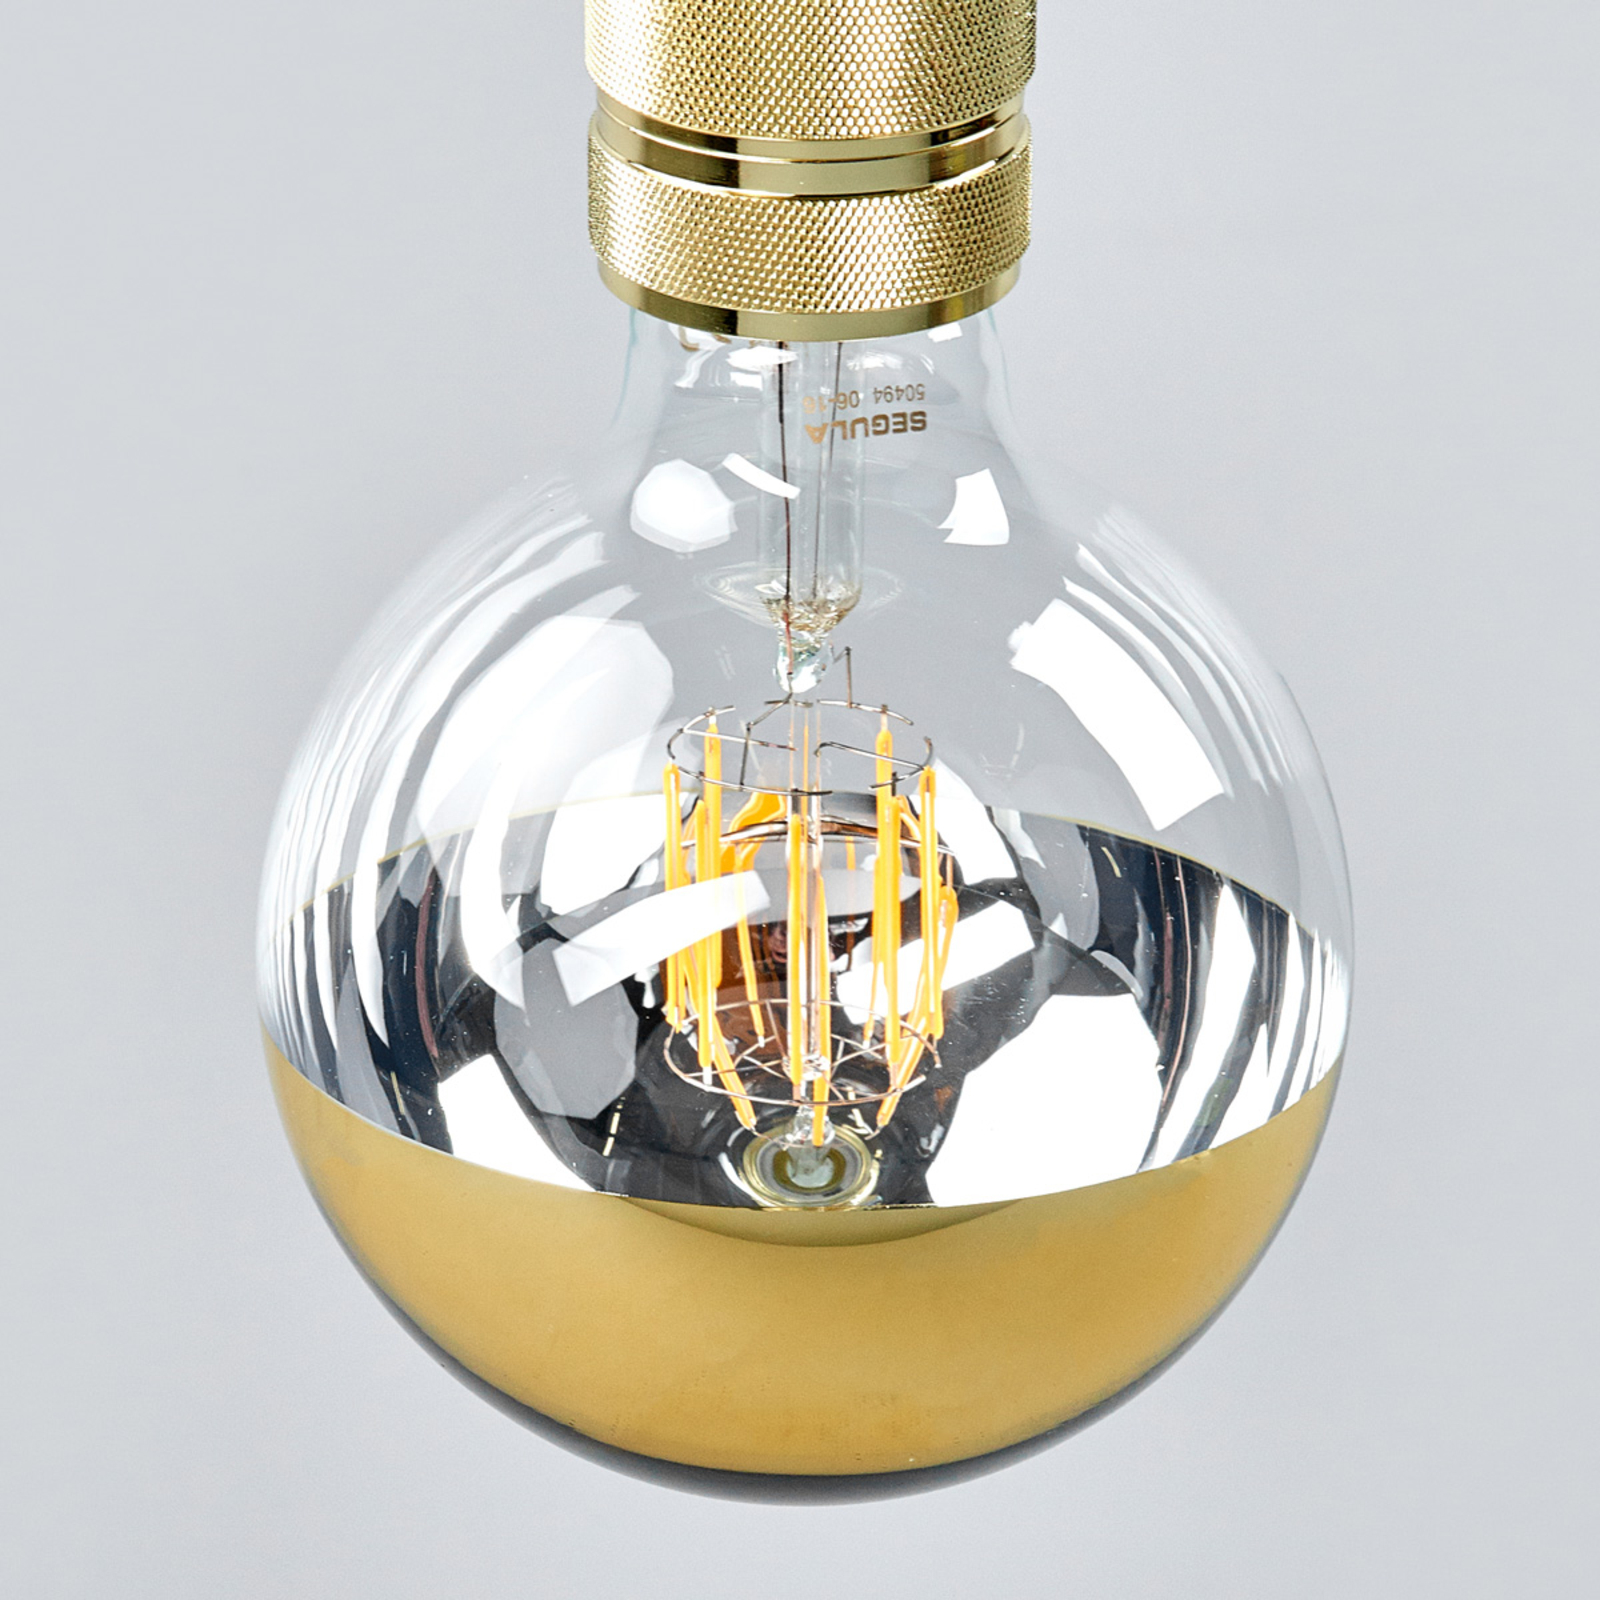 LED-Kopfspiegellampe E27 7W gold